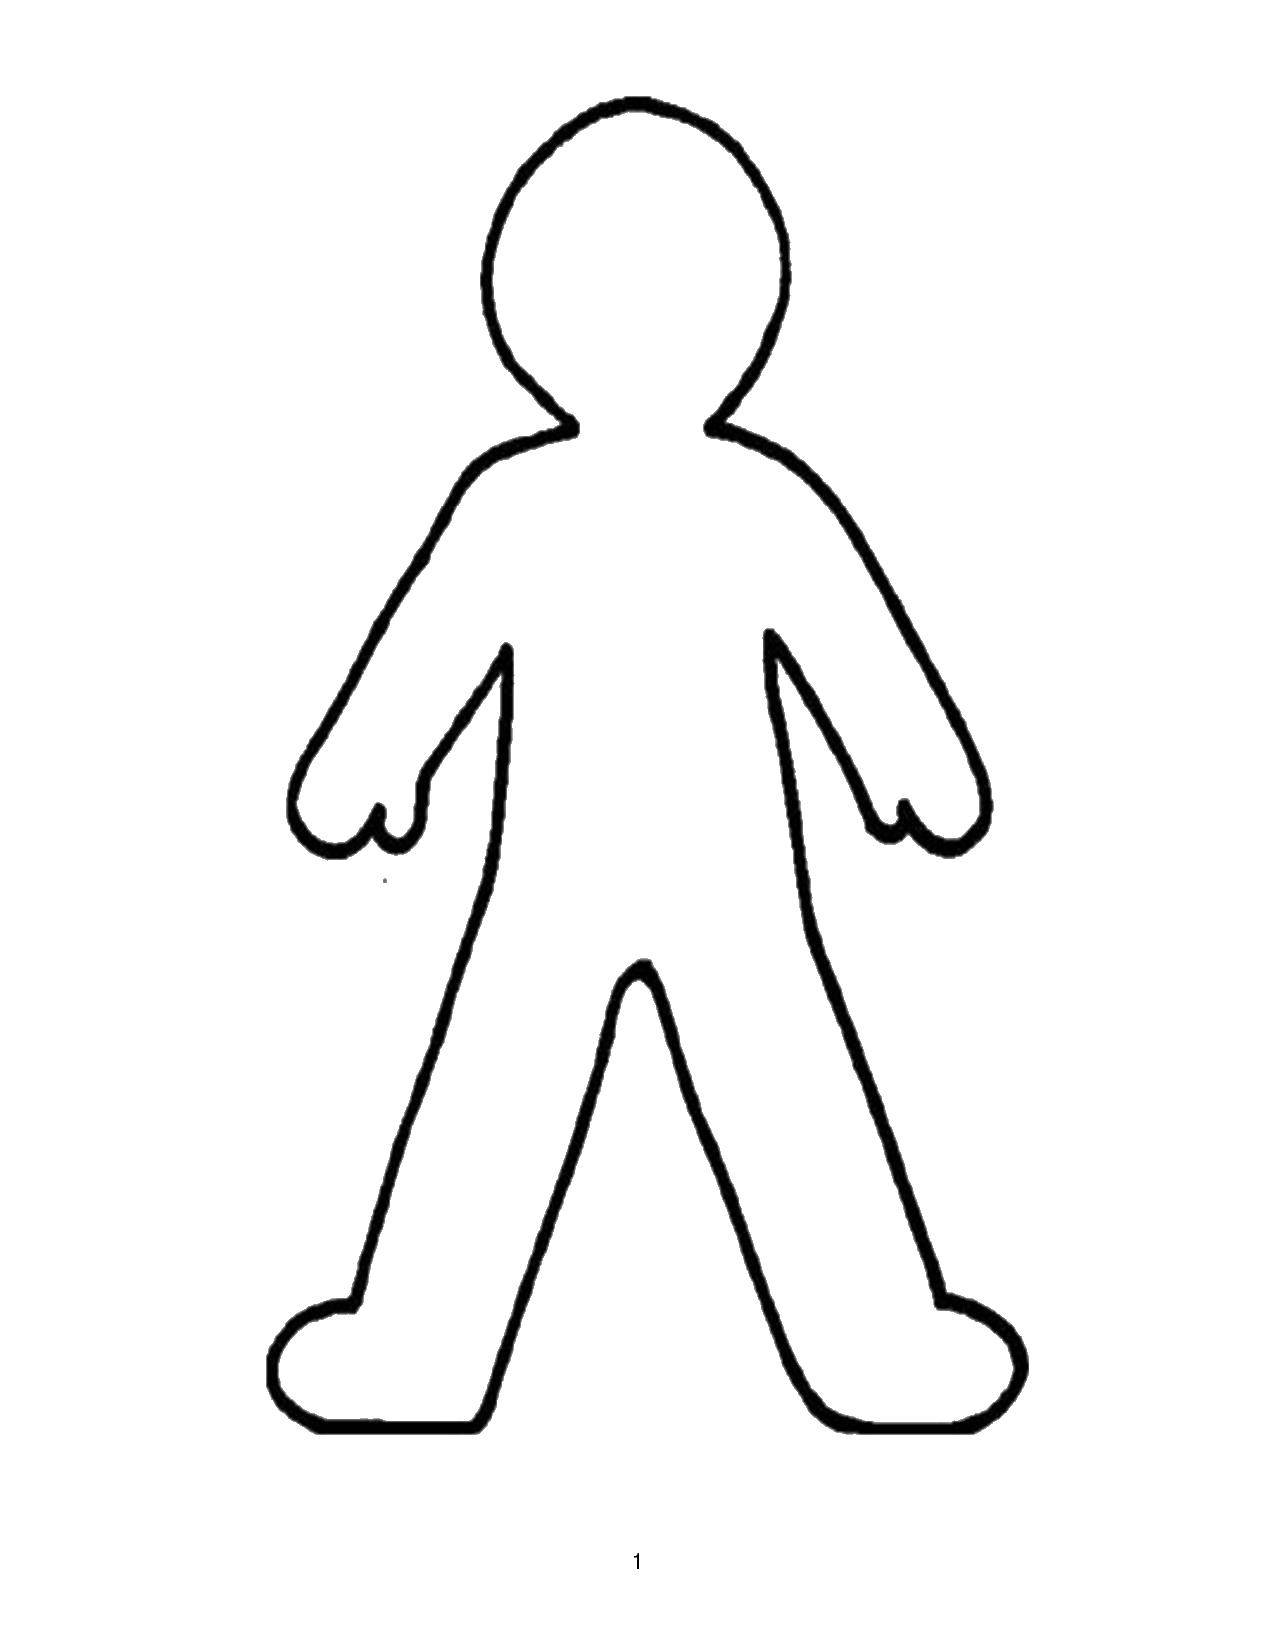 Название: Раскраска Контур бумажного человечка. Категория: Контур девочки. Теги: контур, человек, руки, ноги.